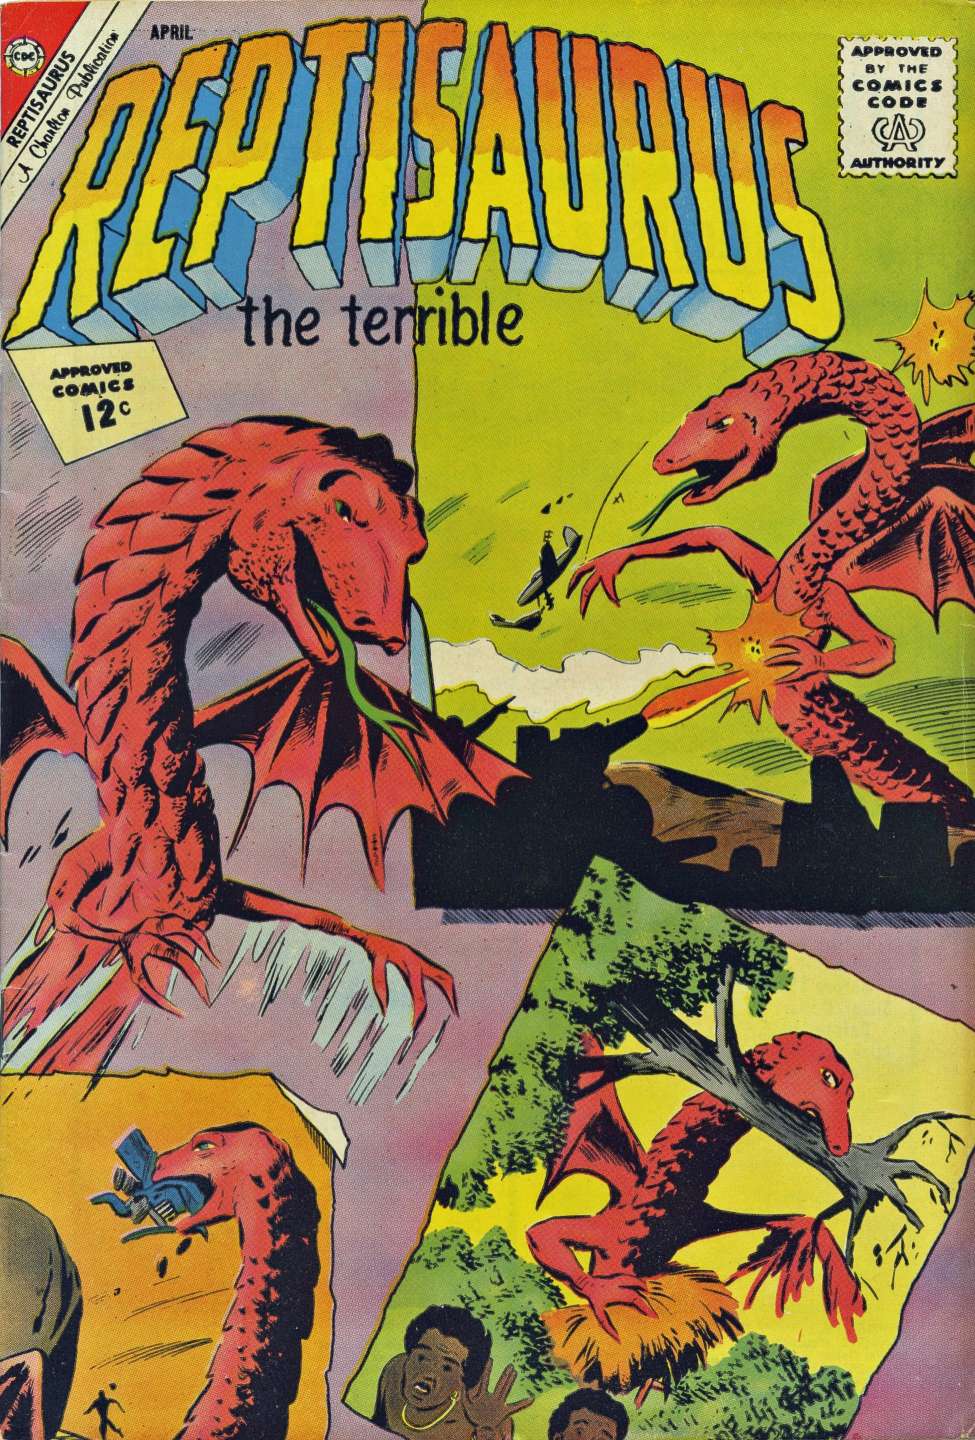 Book Cover For Reptisaurus 4